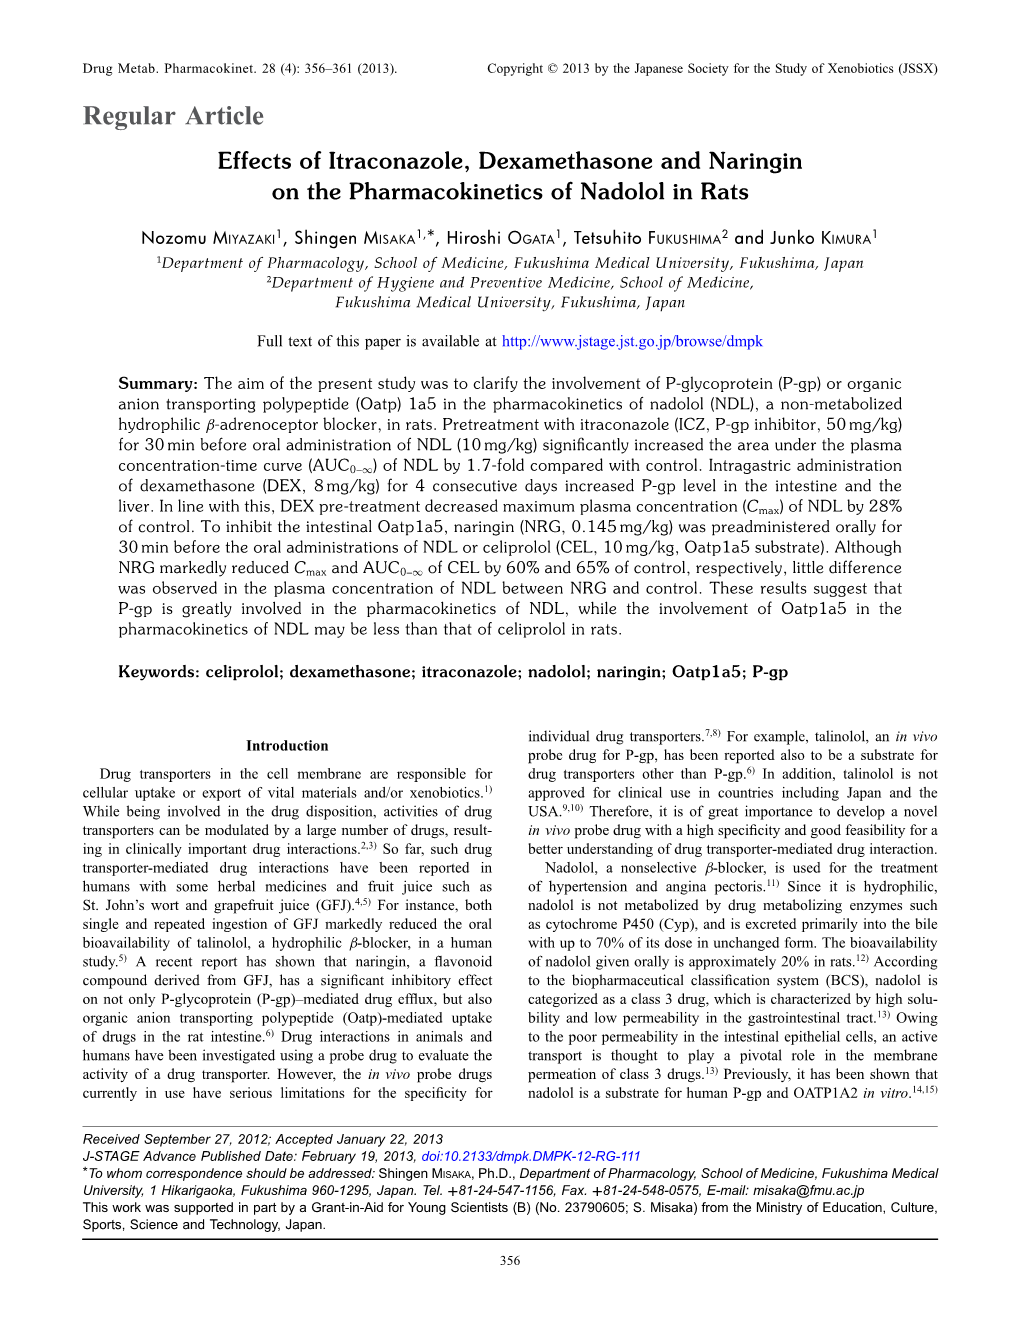 Effects of Itraconazole, Dexamethasone and Naringin on the Pharmacokinetics of Nadolol in Rats